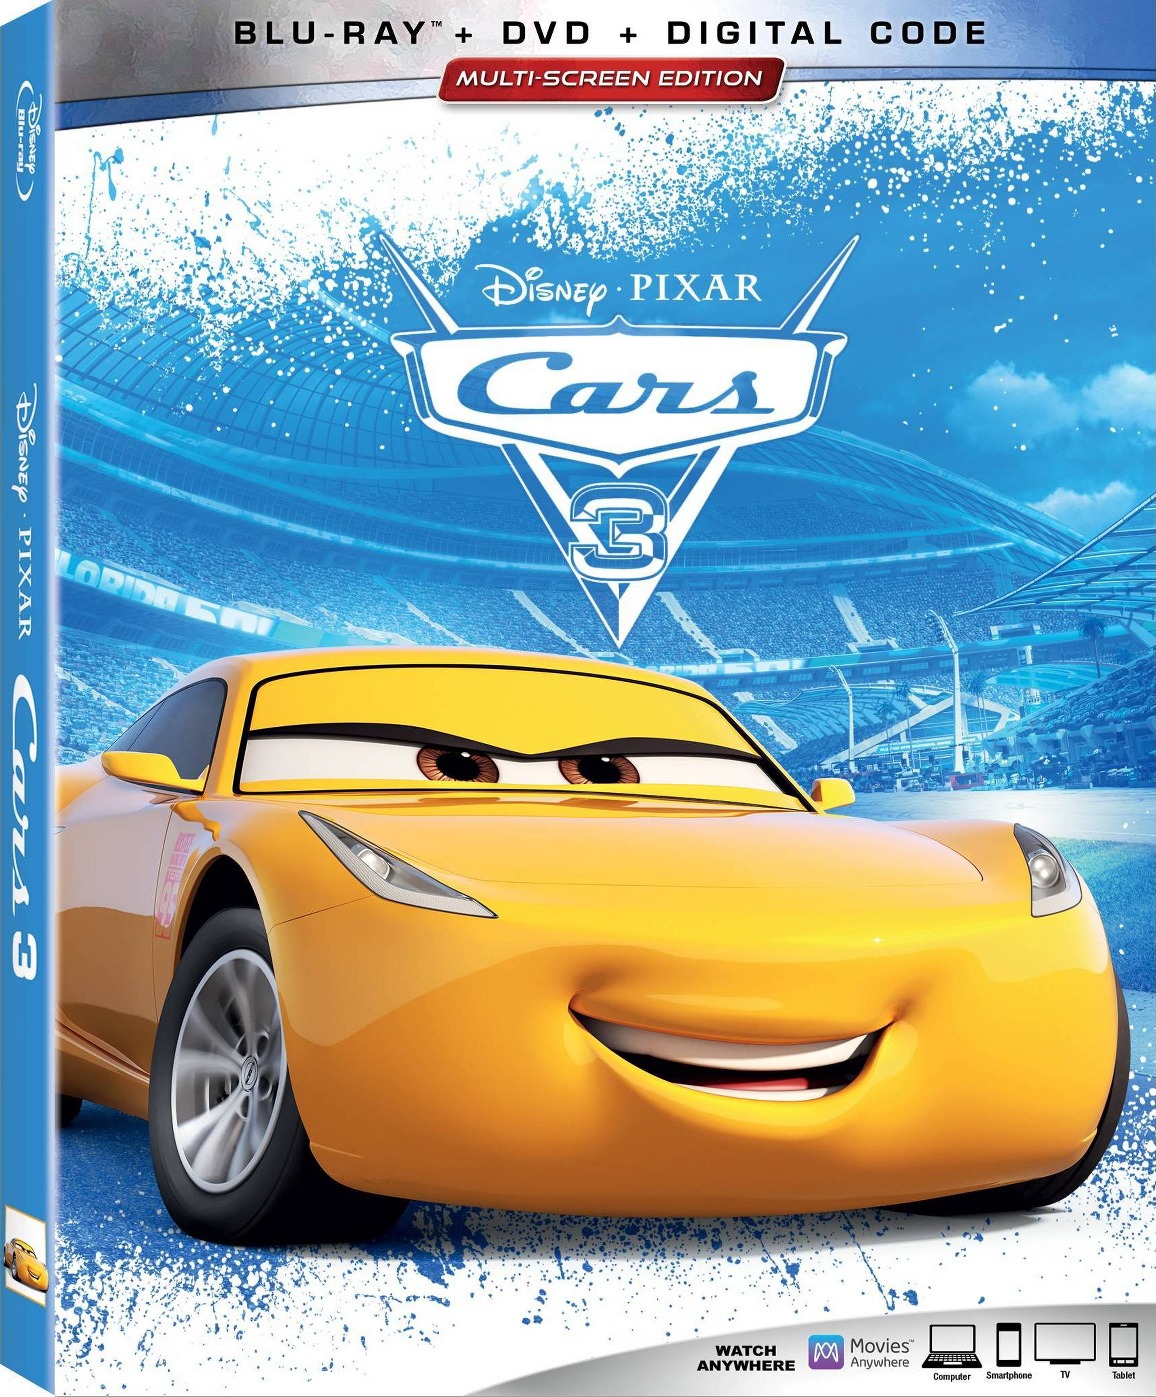 Catalog Pixar Titles On 4k Uhd Multi Screen Edition Blu Rays Pixar Post Forum